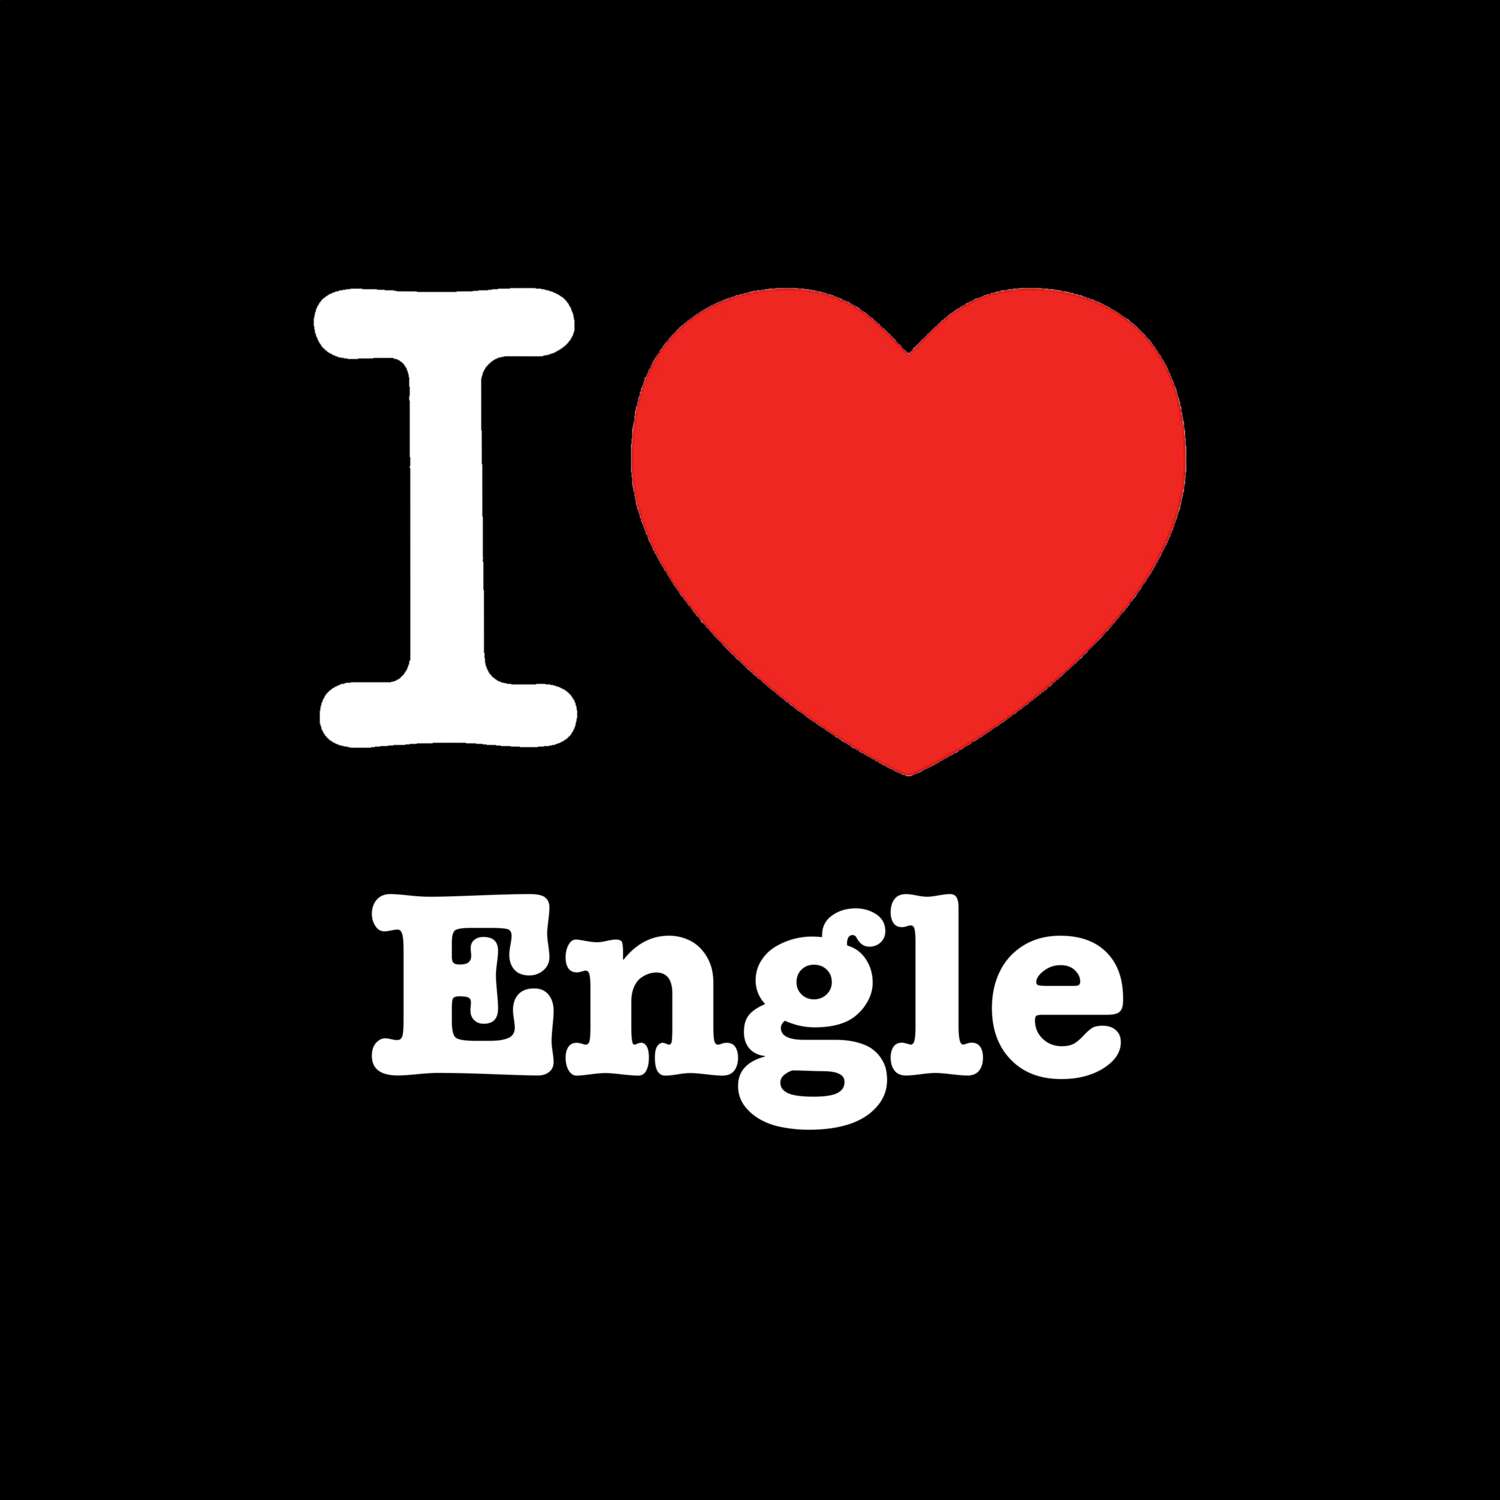 Engle T-Shirt »I love«